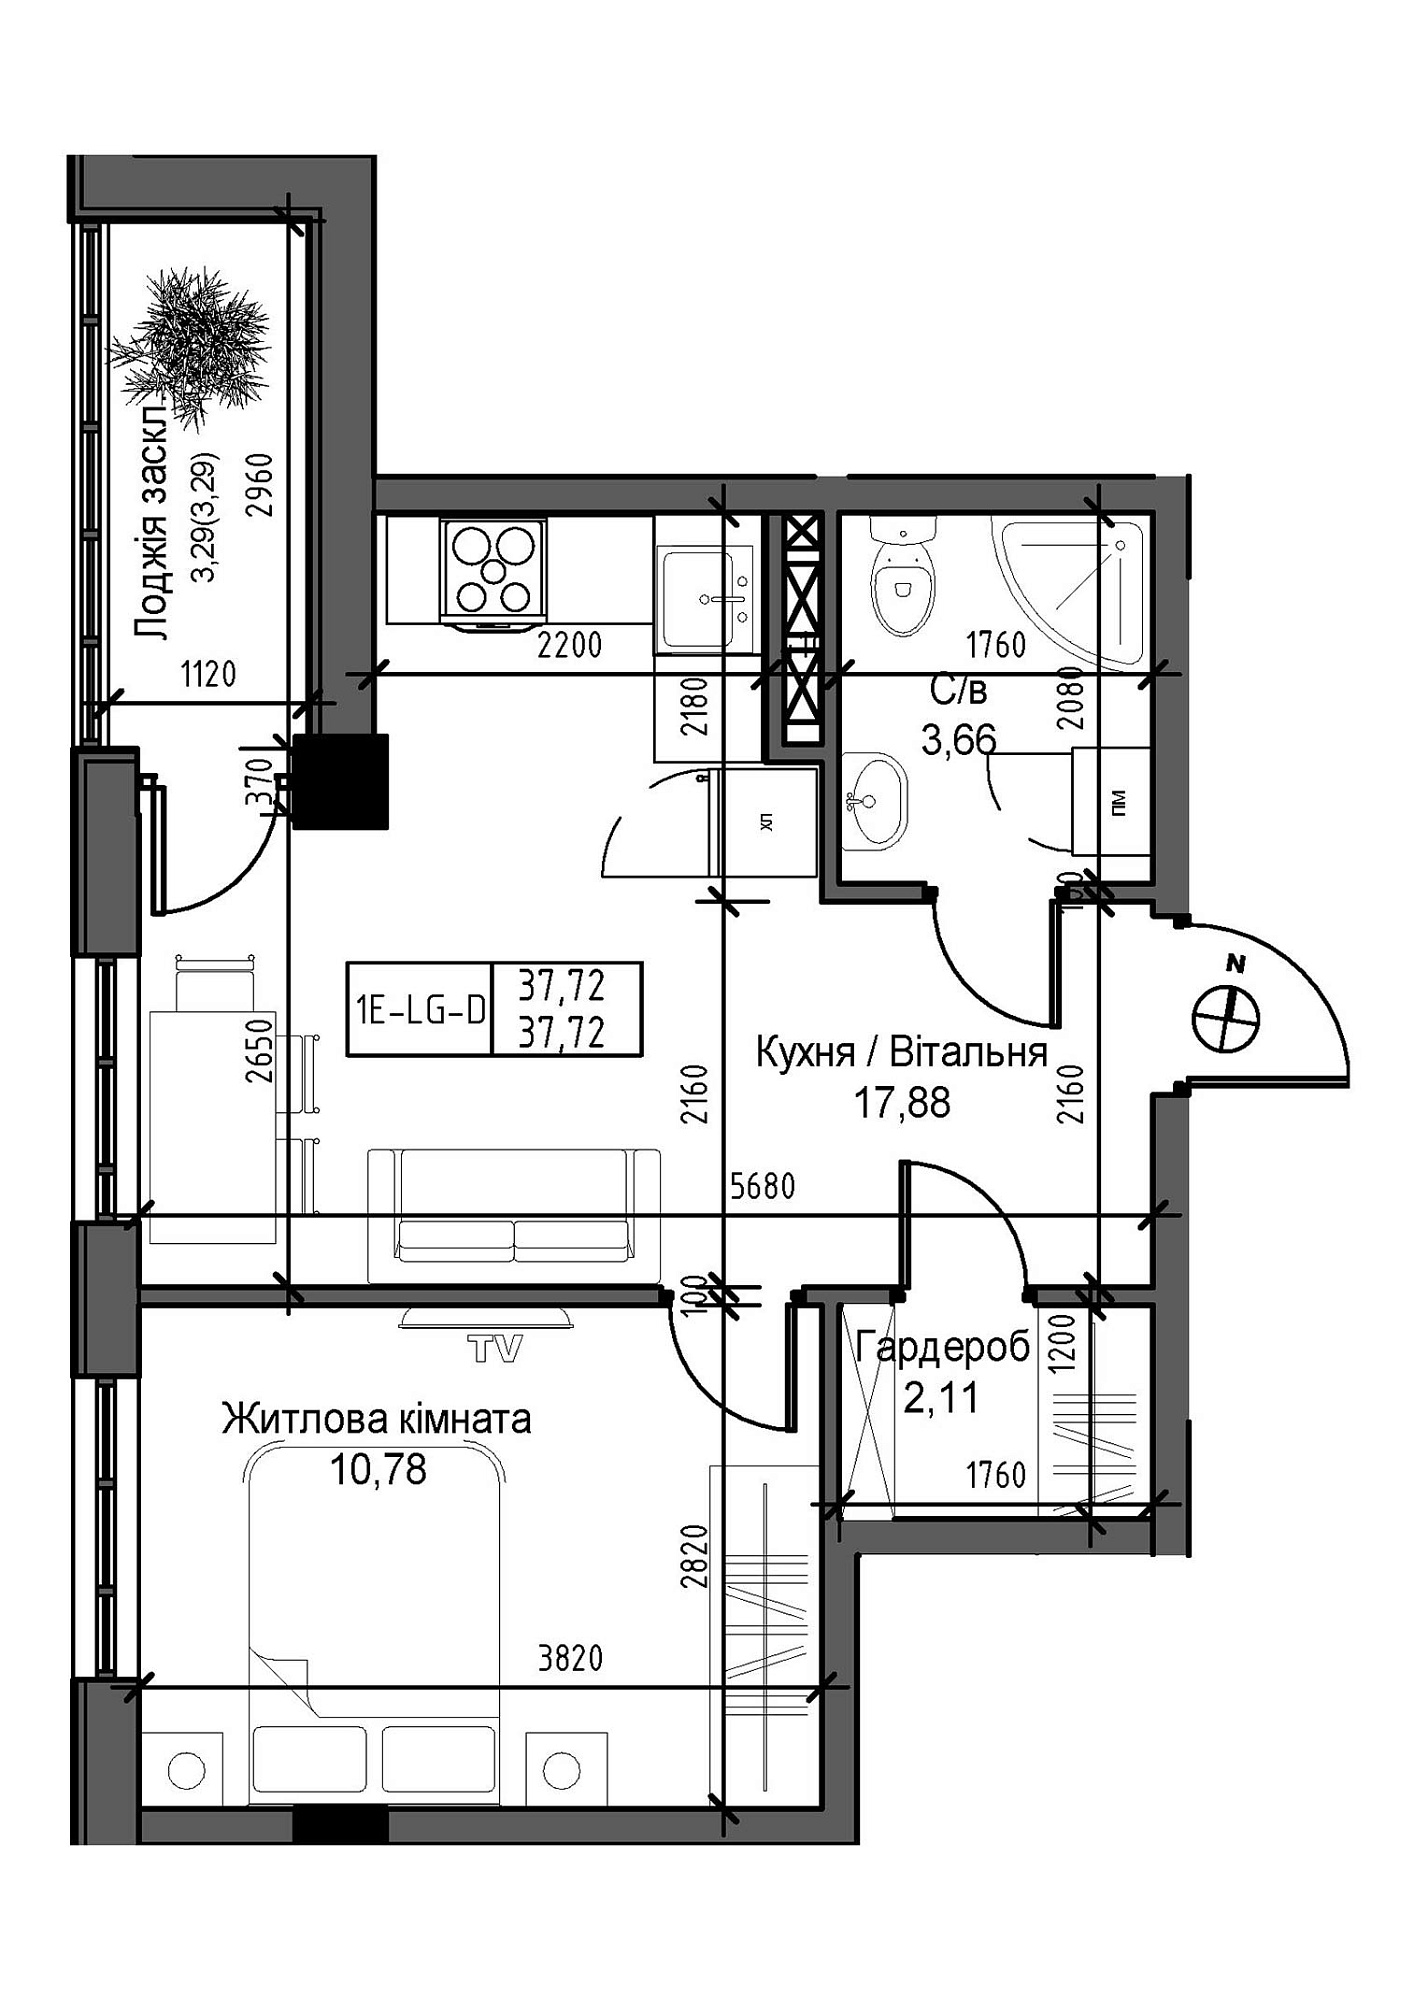 Планування 1-к квартира площею 37.72м2, UM-007-03/0011.